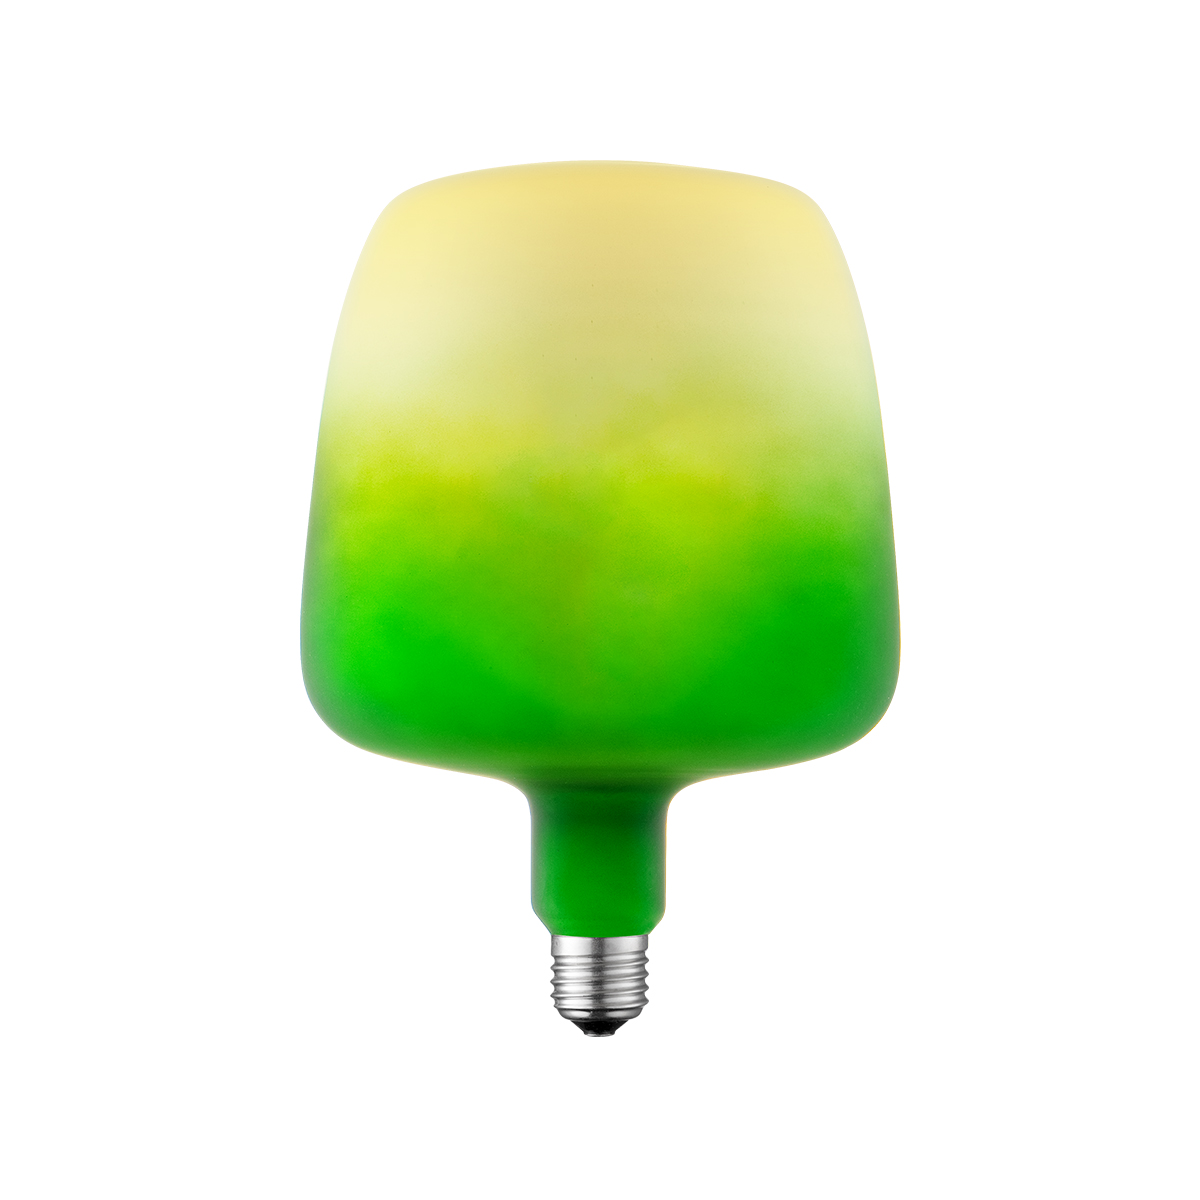 Tangla lighting - TLB-9003-04O - LED Light Bulb Single Spiral filament - 4W gradient green opal - large - non dimmable - E27